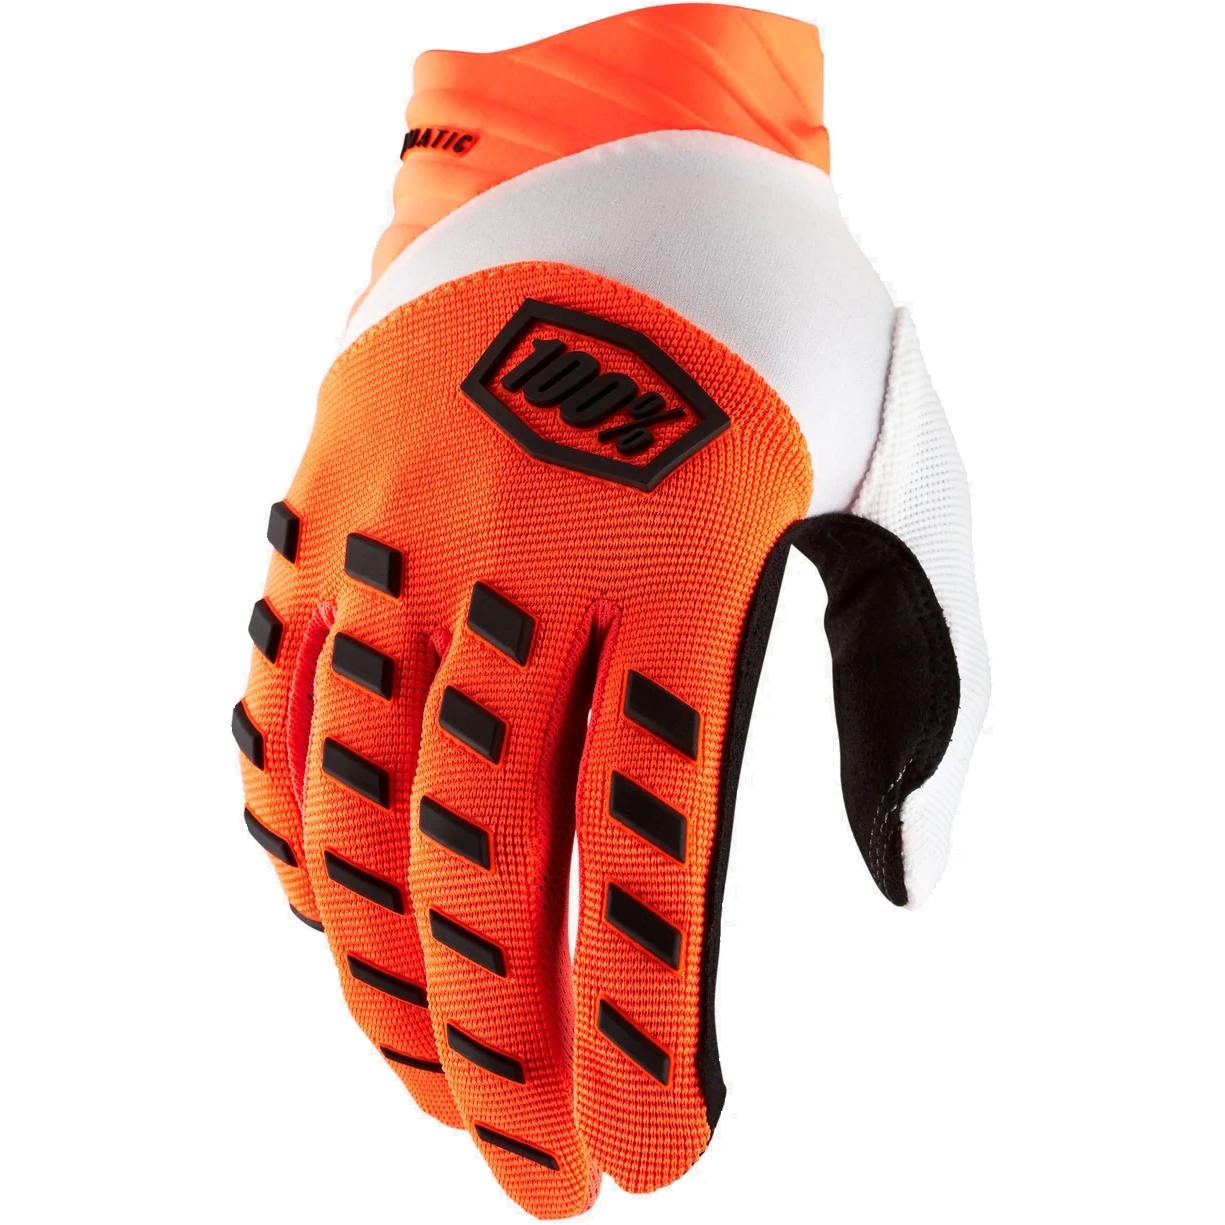 Productfoto van 100% Airmatic Bike Gloves - fluo orange